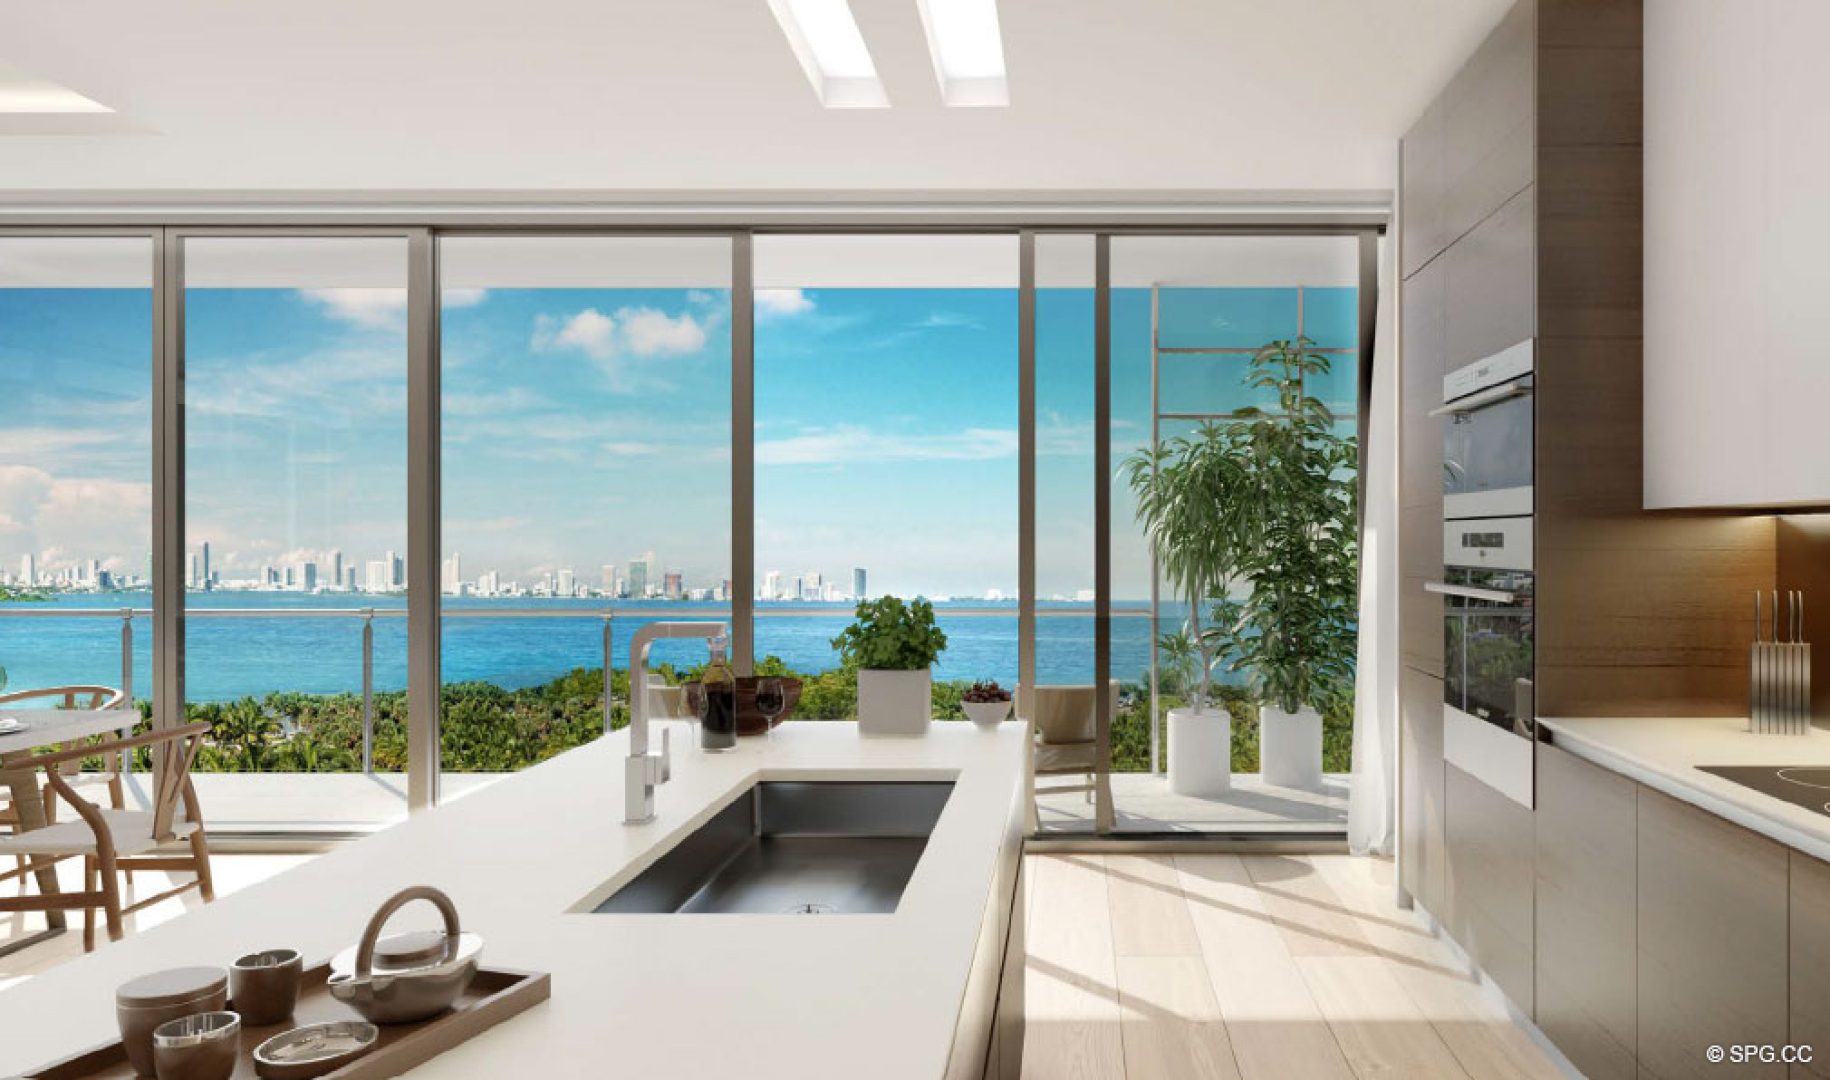 Floor to Ceiling Glass Residences at 3900 Alton, Luxury Waterfront Condos in Miami Beach, Florida 33140